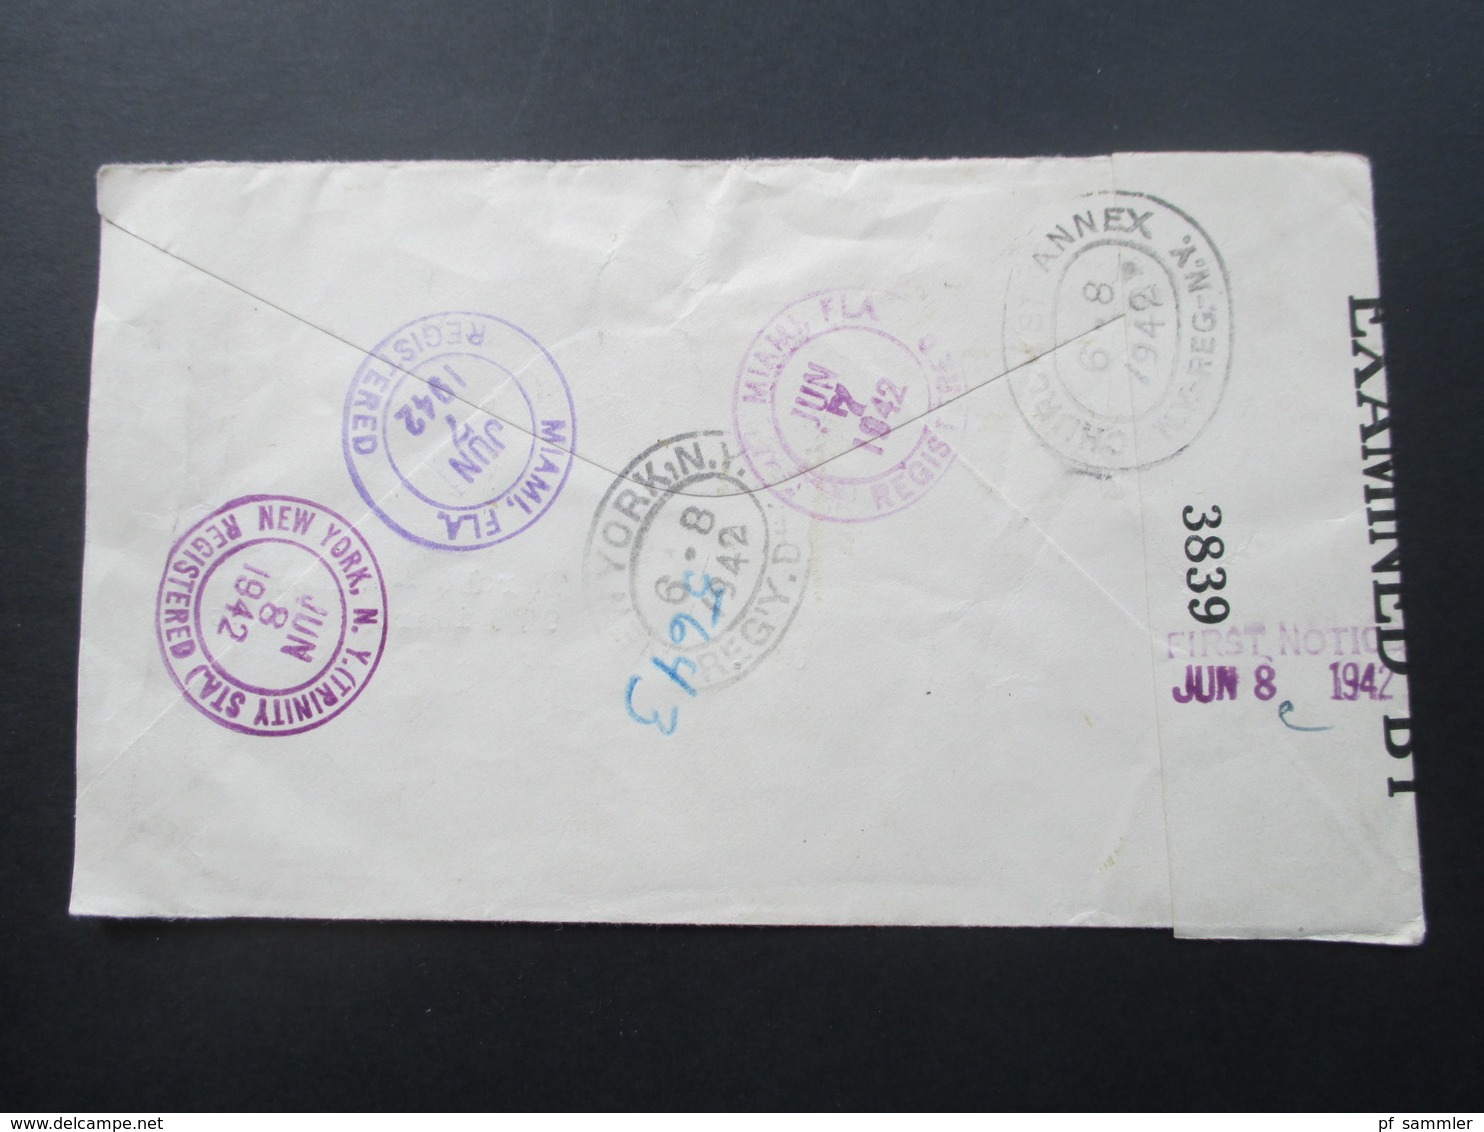 Zensurbeleg Domikanische Republik. Air Mail / Luftpost Nach New York. Examined By 3839. 9 Stempel!! - Repubblica Domenicana